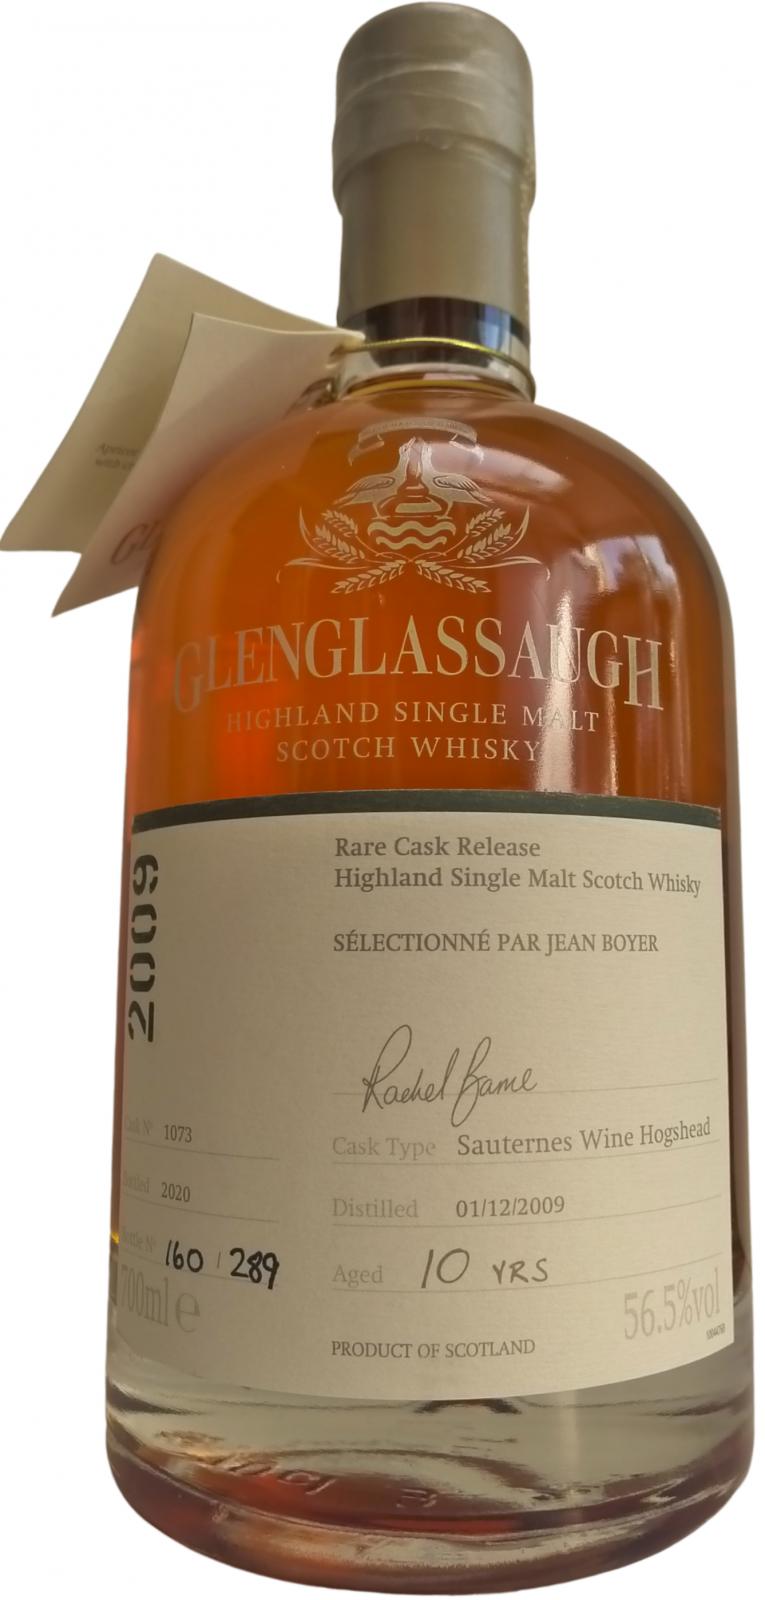 Glenglassaugh 2009 Sauternes Wine Hogshead #1073 Selectionne Par Jean Boyer 56.5% 700ml